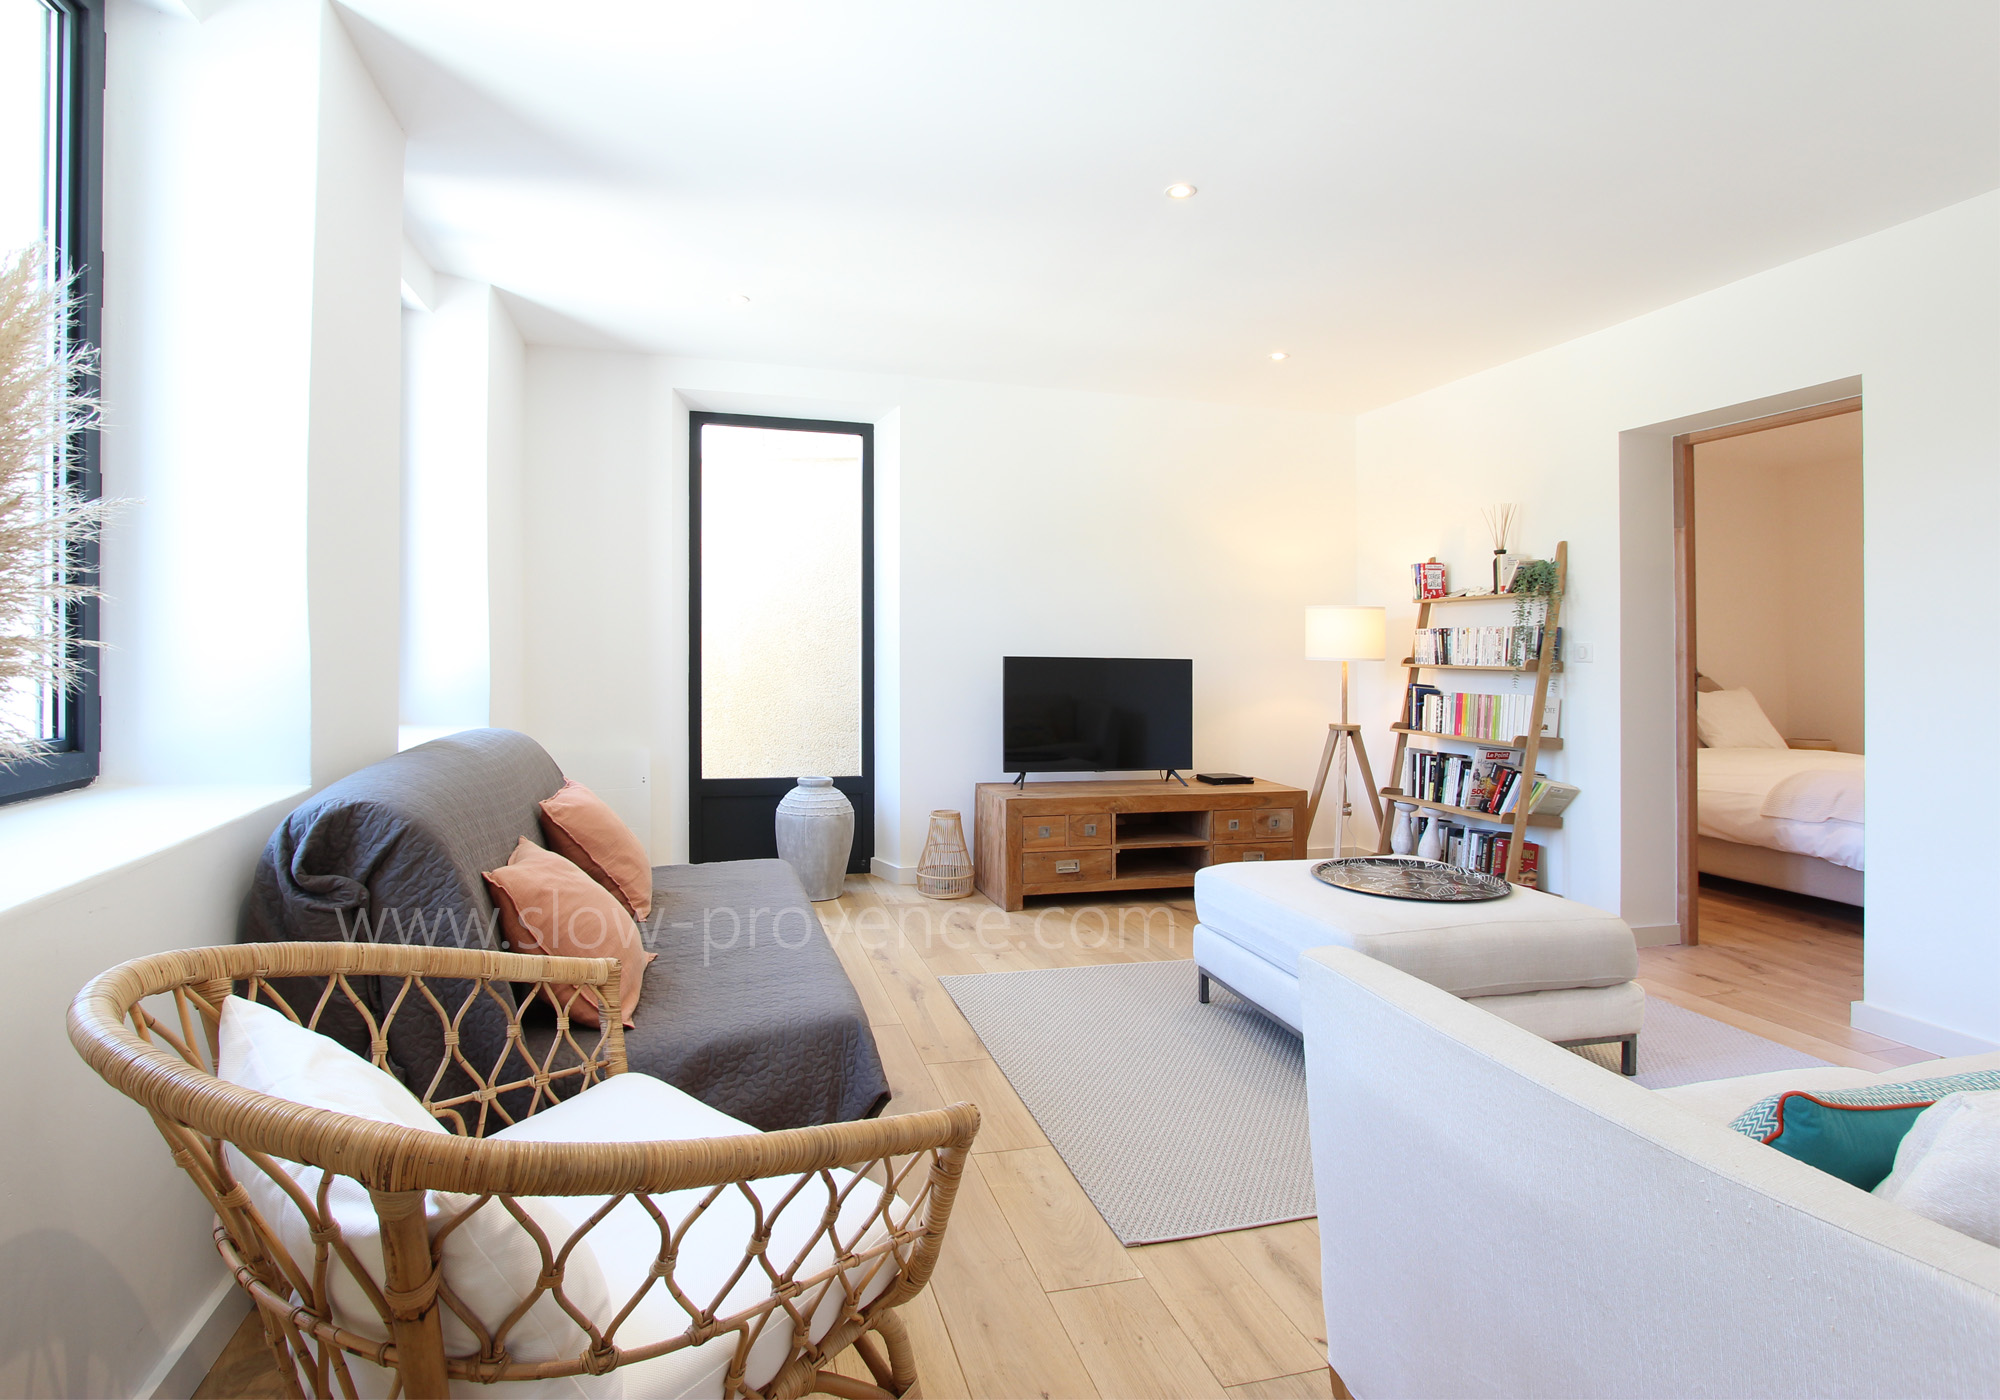 Living-room with minimalist decoration